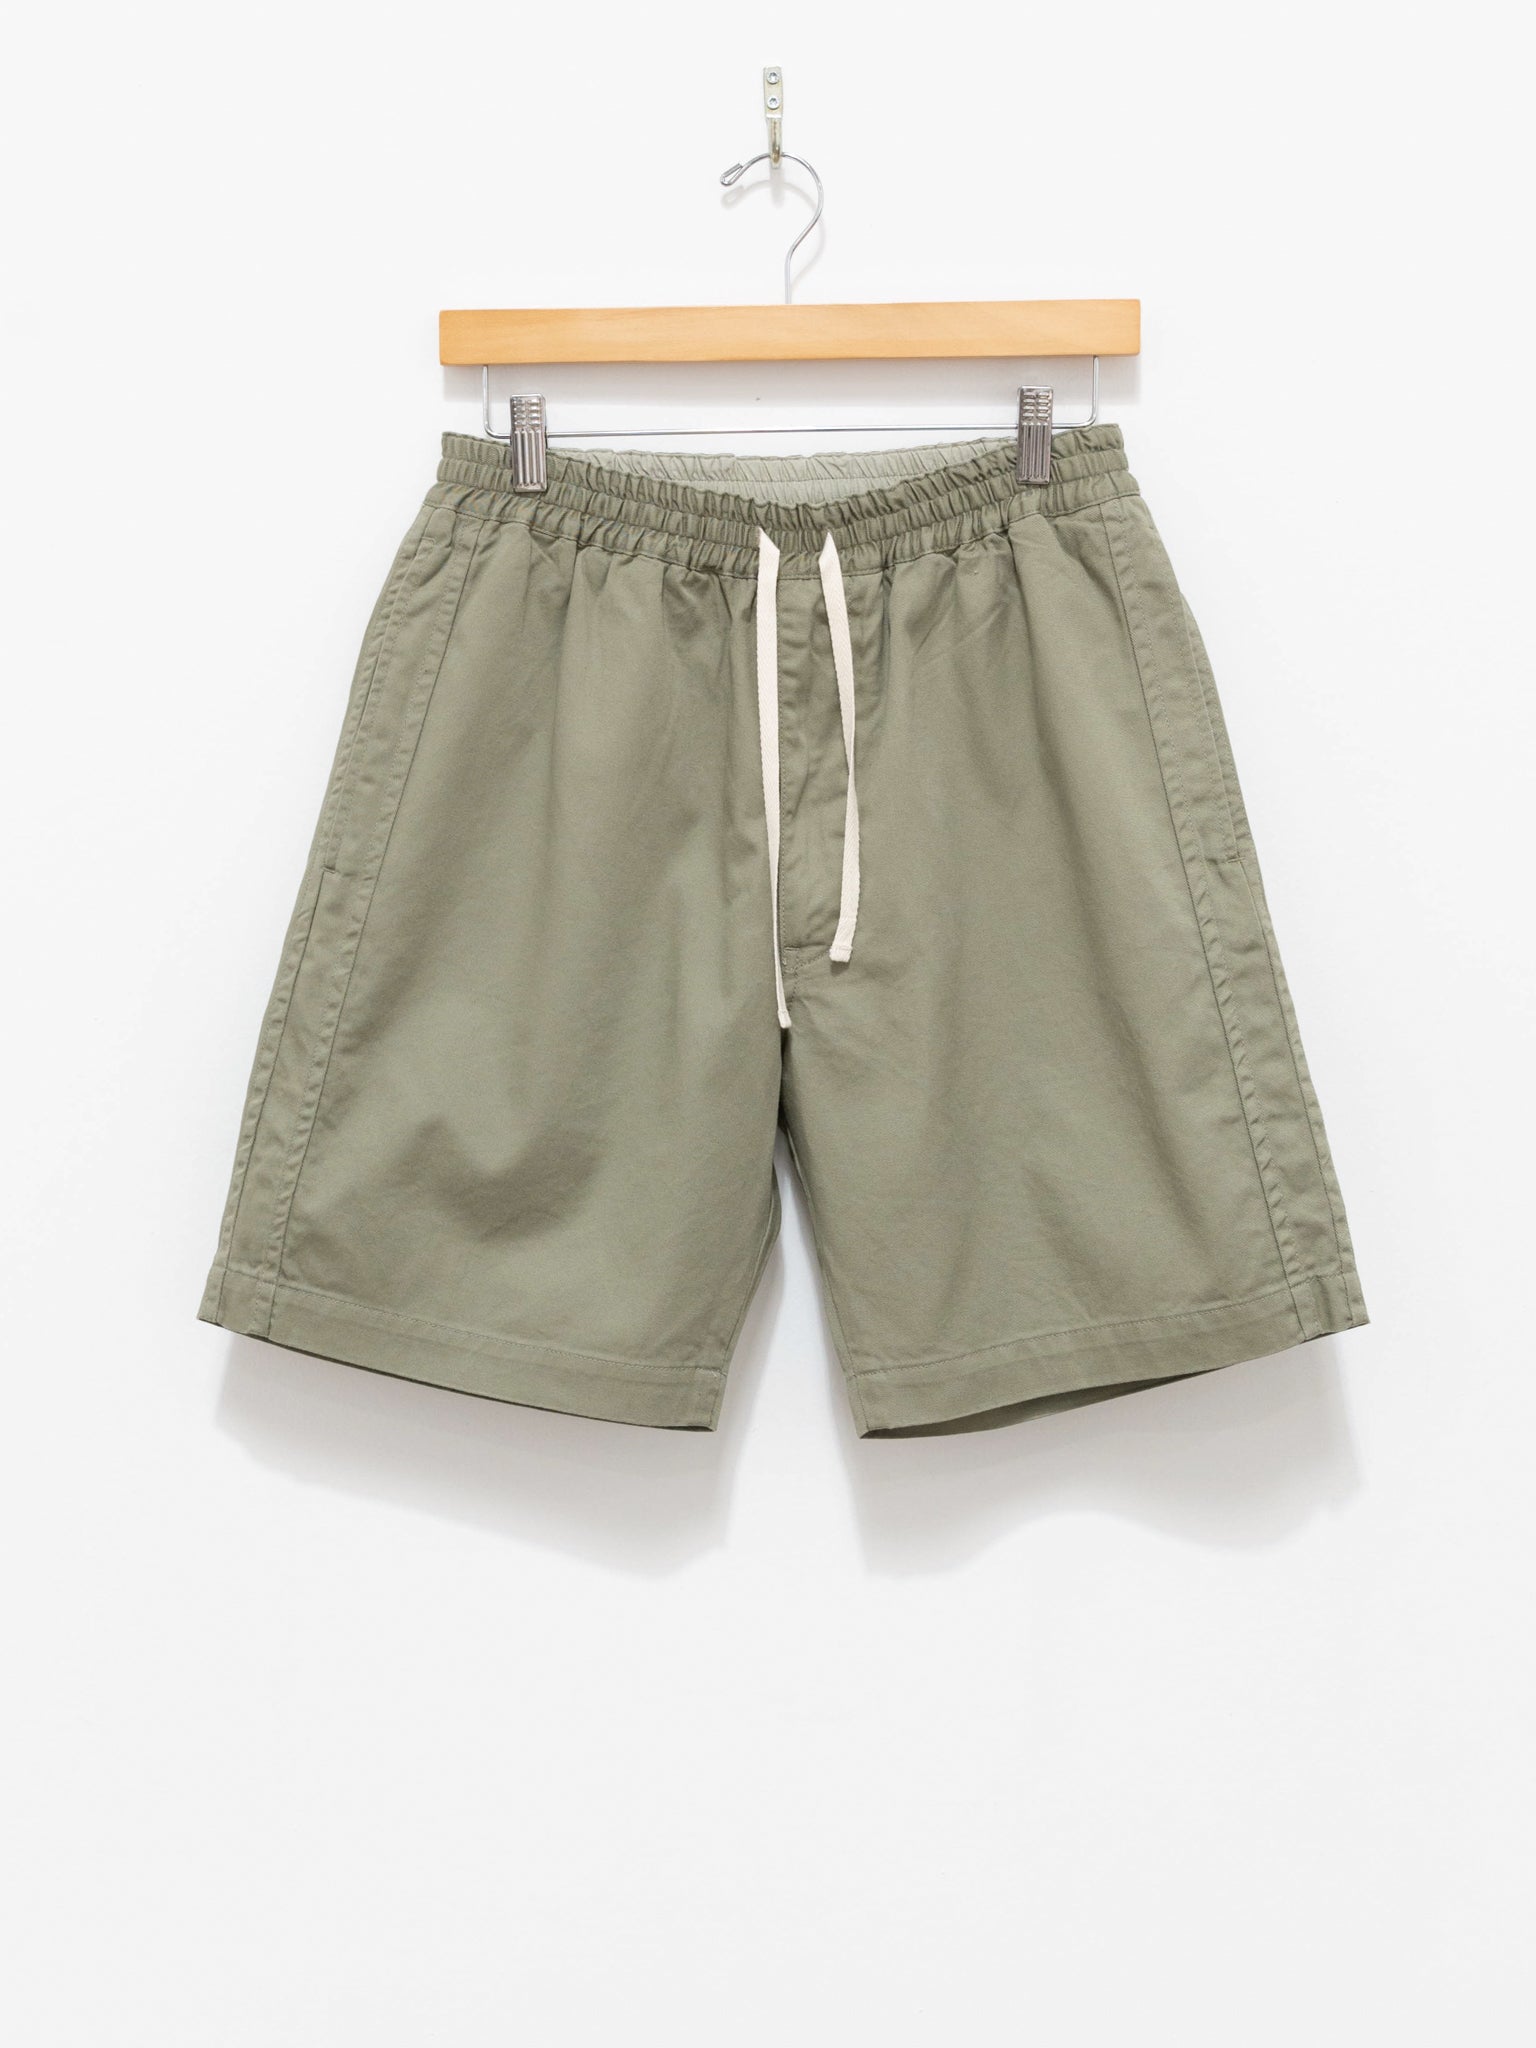 Namu Shop - Fujito Line Easy Shorts - Light Olive